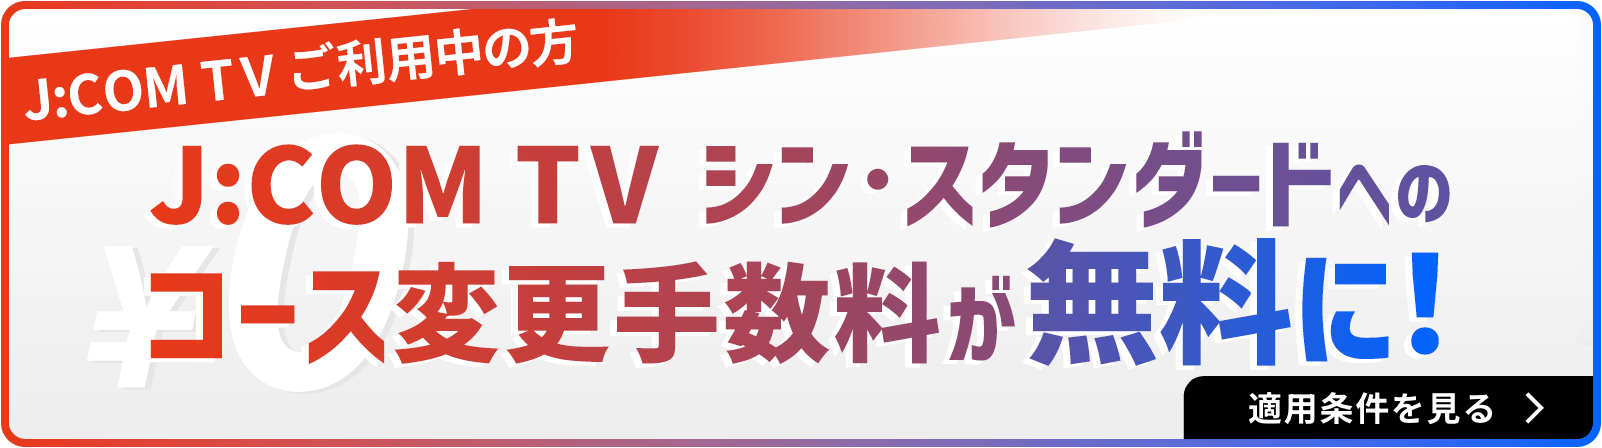 J:COM TV Shin Standard 에의 코스 변경 수수료가 무료로!